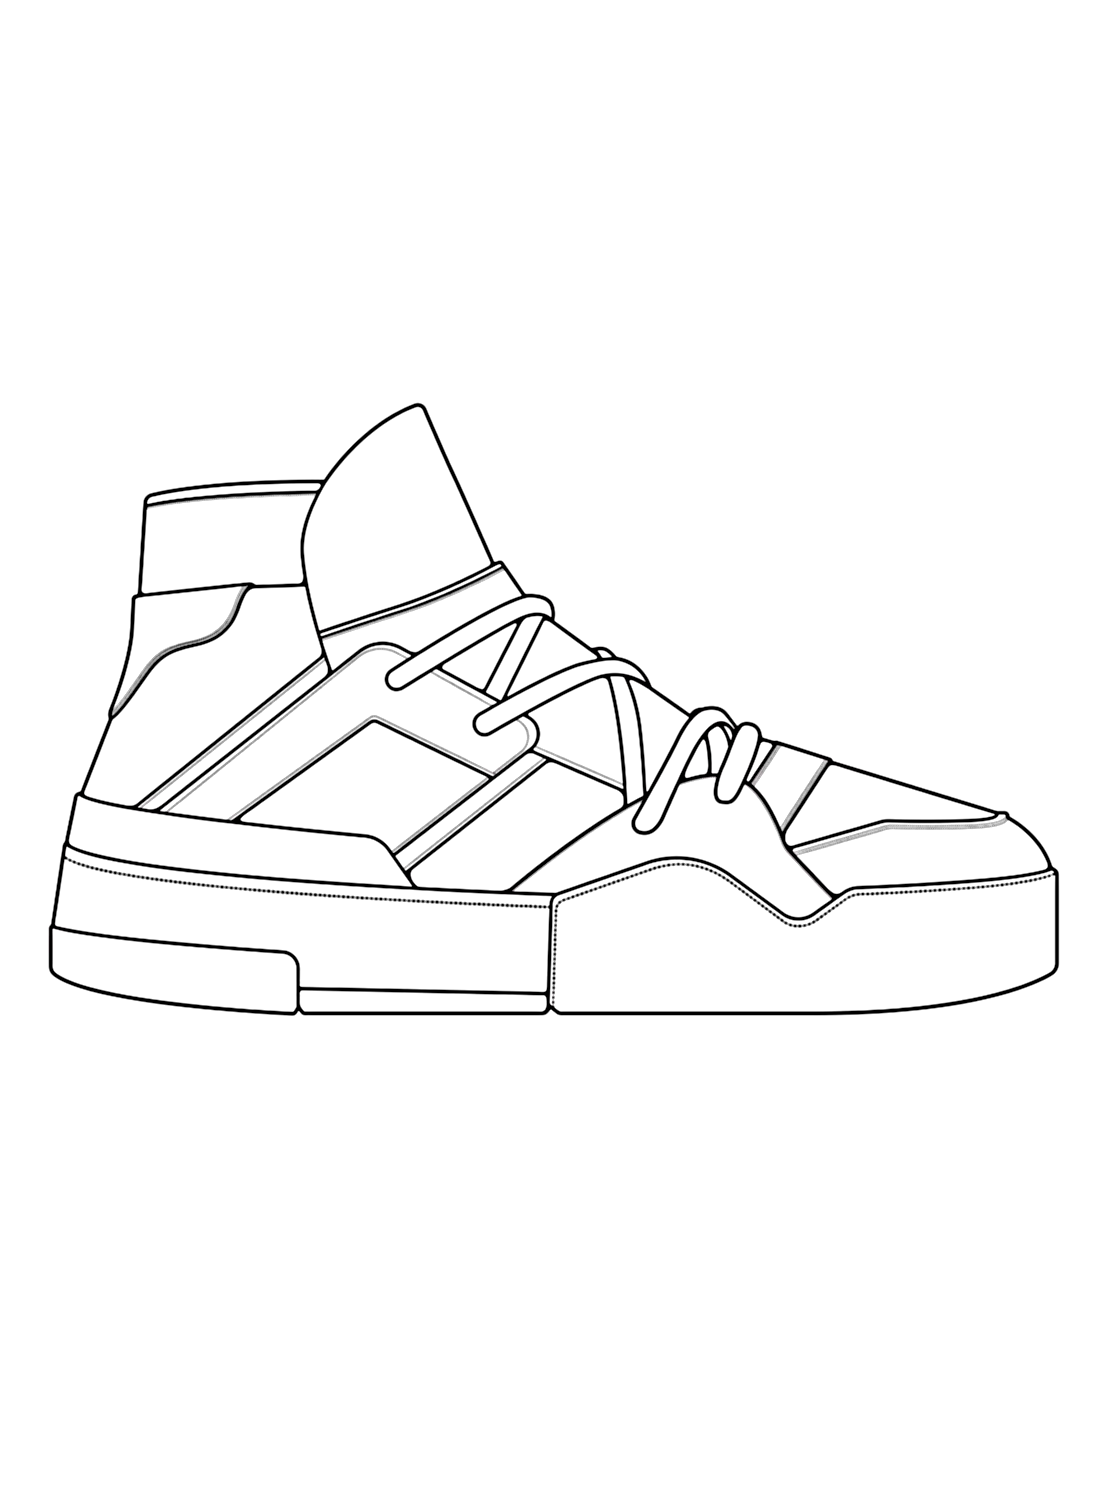 Imagem para colorir de tênis de Shoe